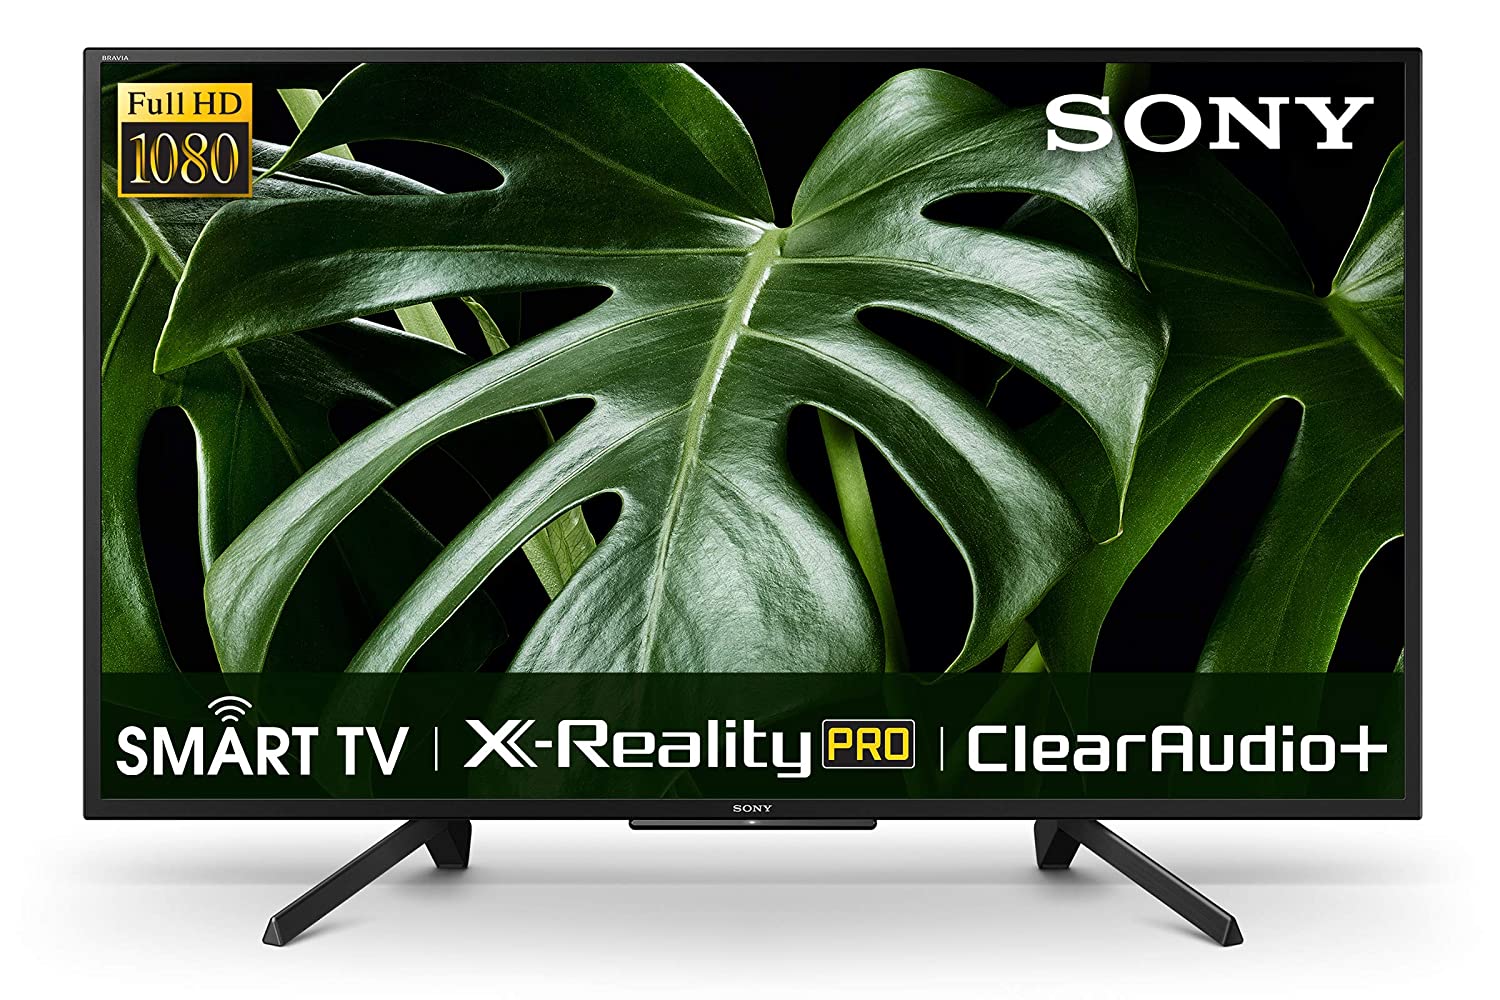 Sony Bravia 125.7 cm (50 inches) Full HD LED Smart TV KLV-50W672G (Black) 